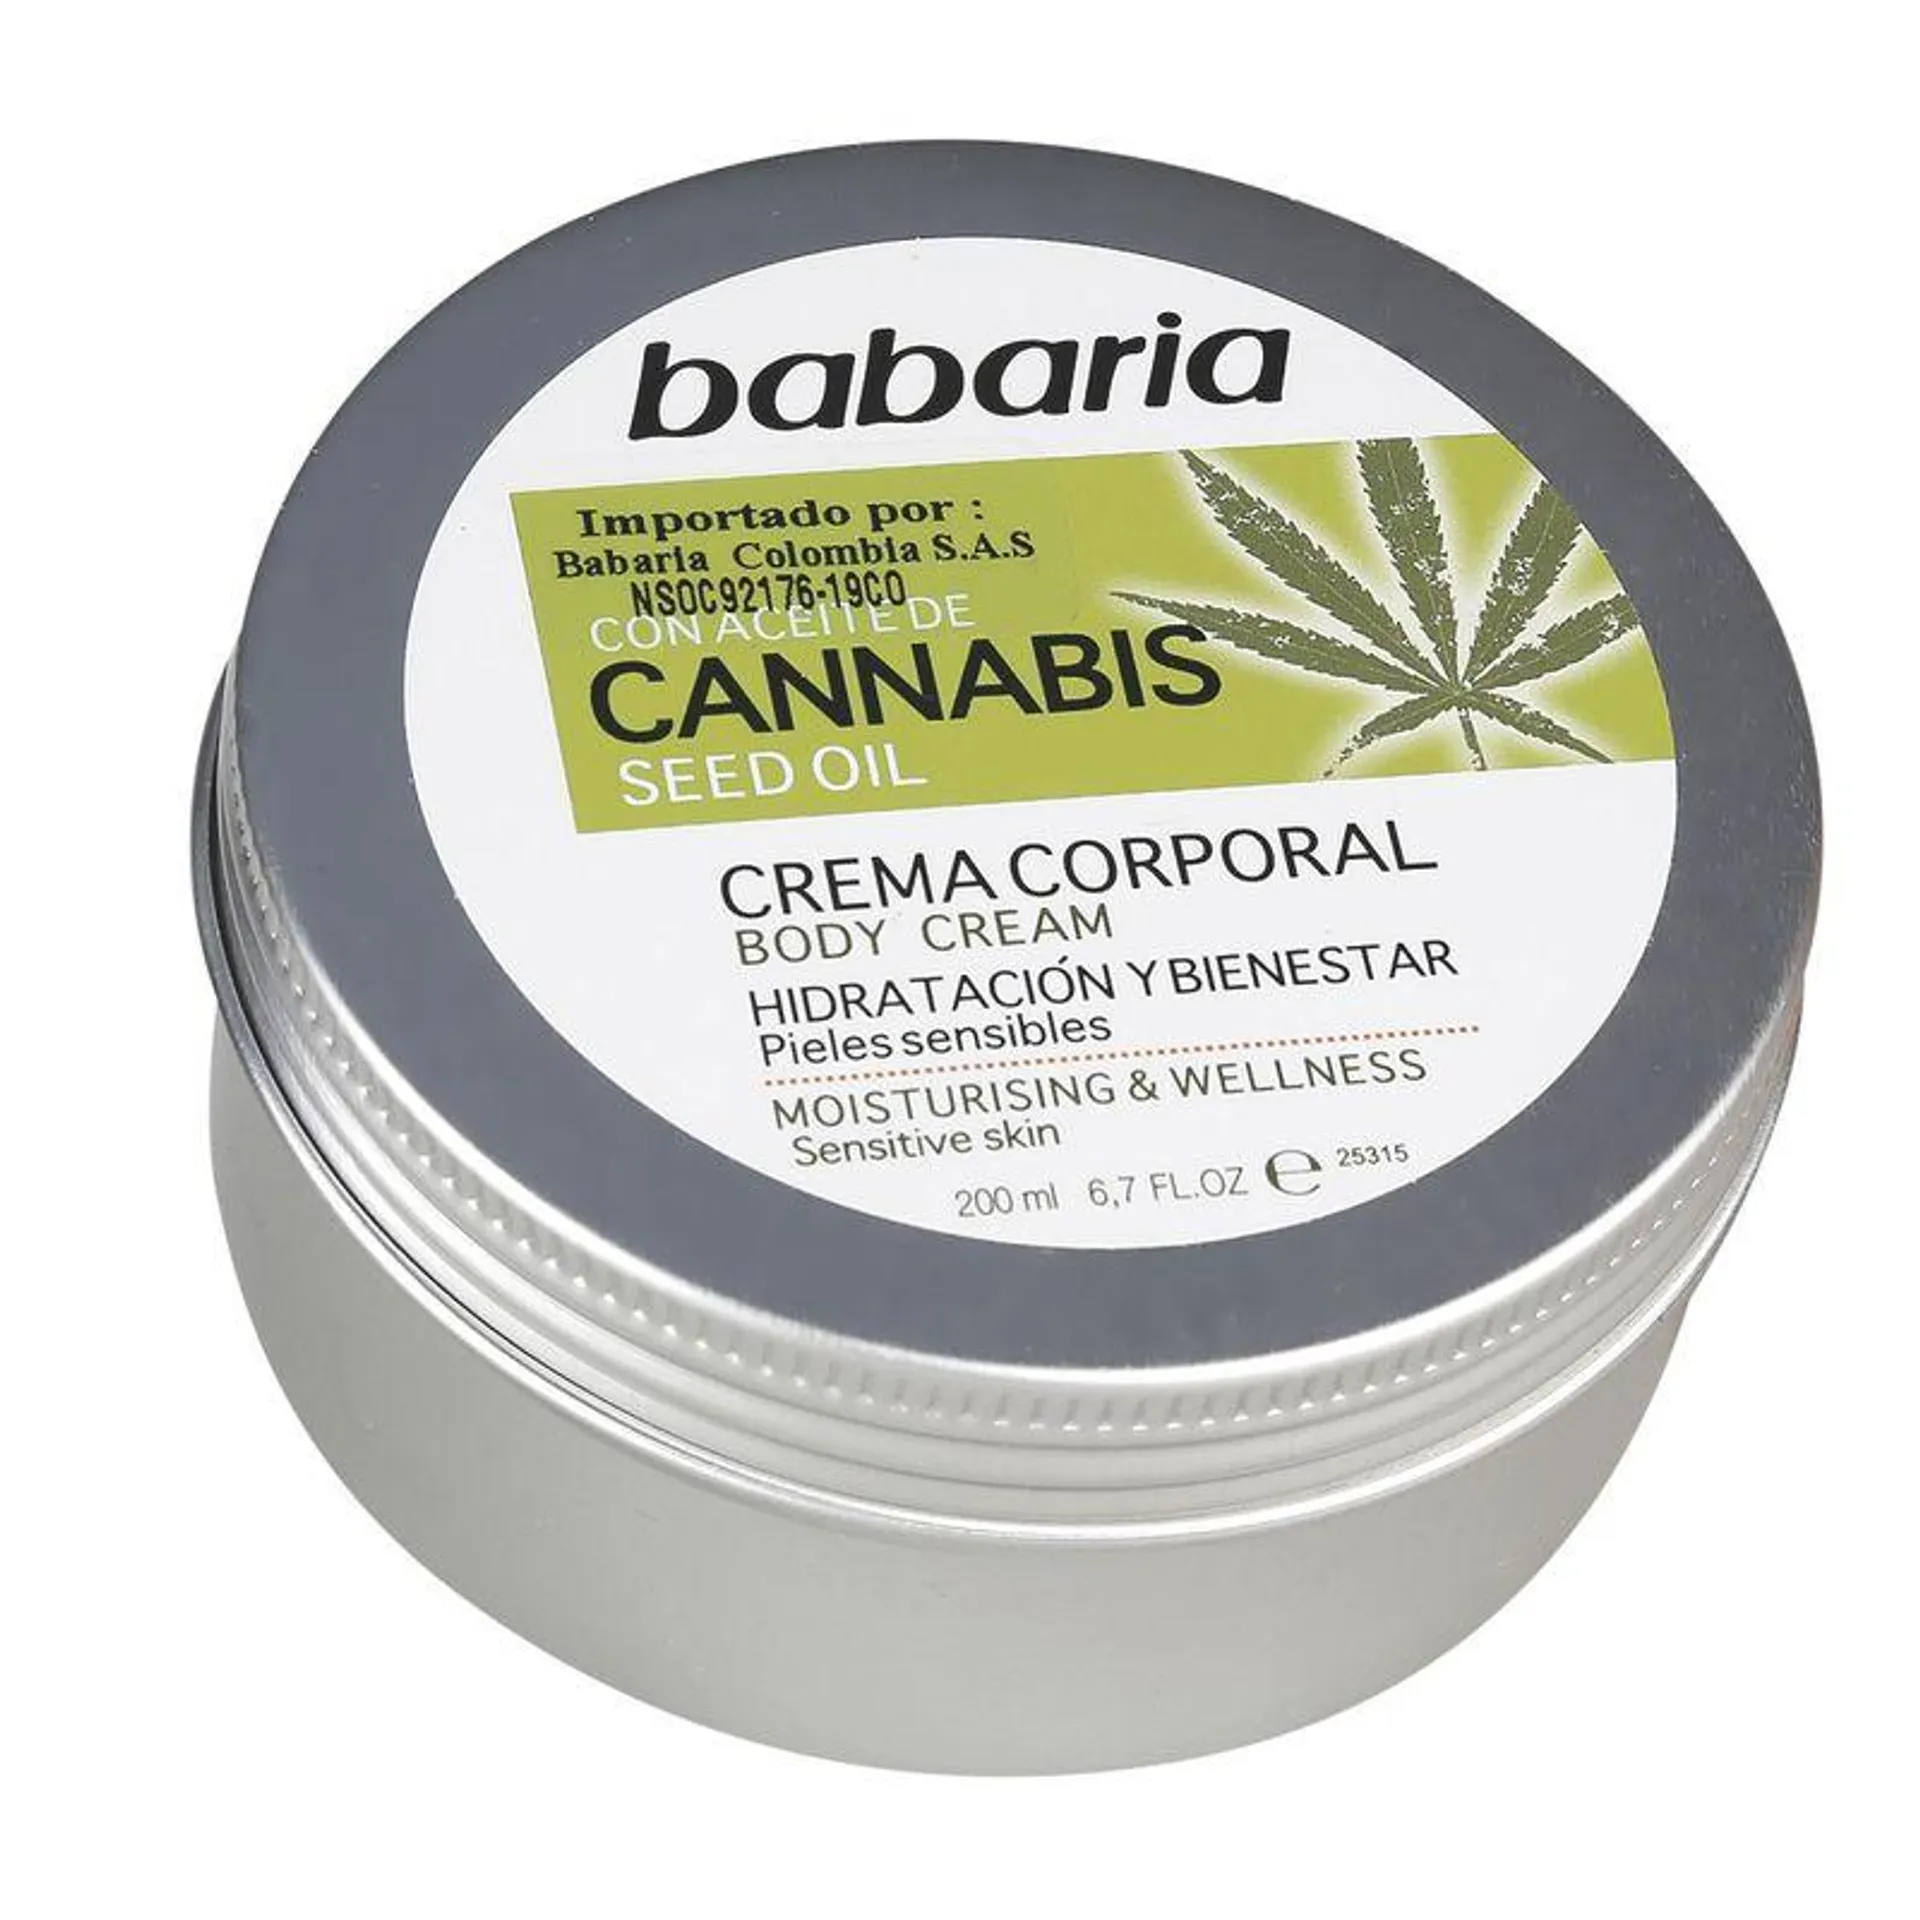 Babaria Crema Coporal Cannabis